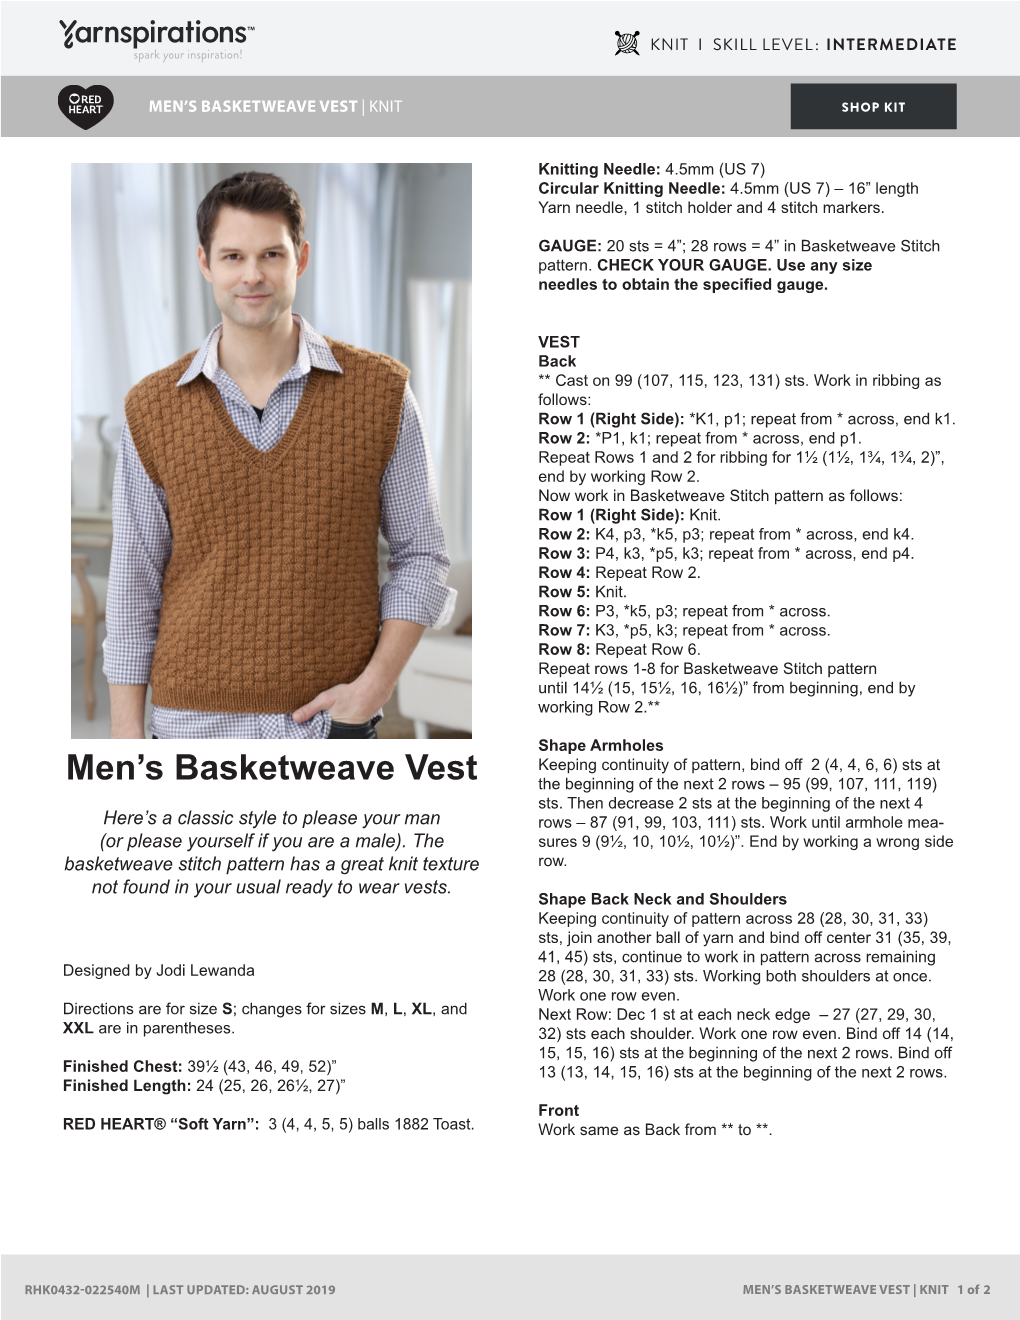 Men's Basketweave Vest